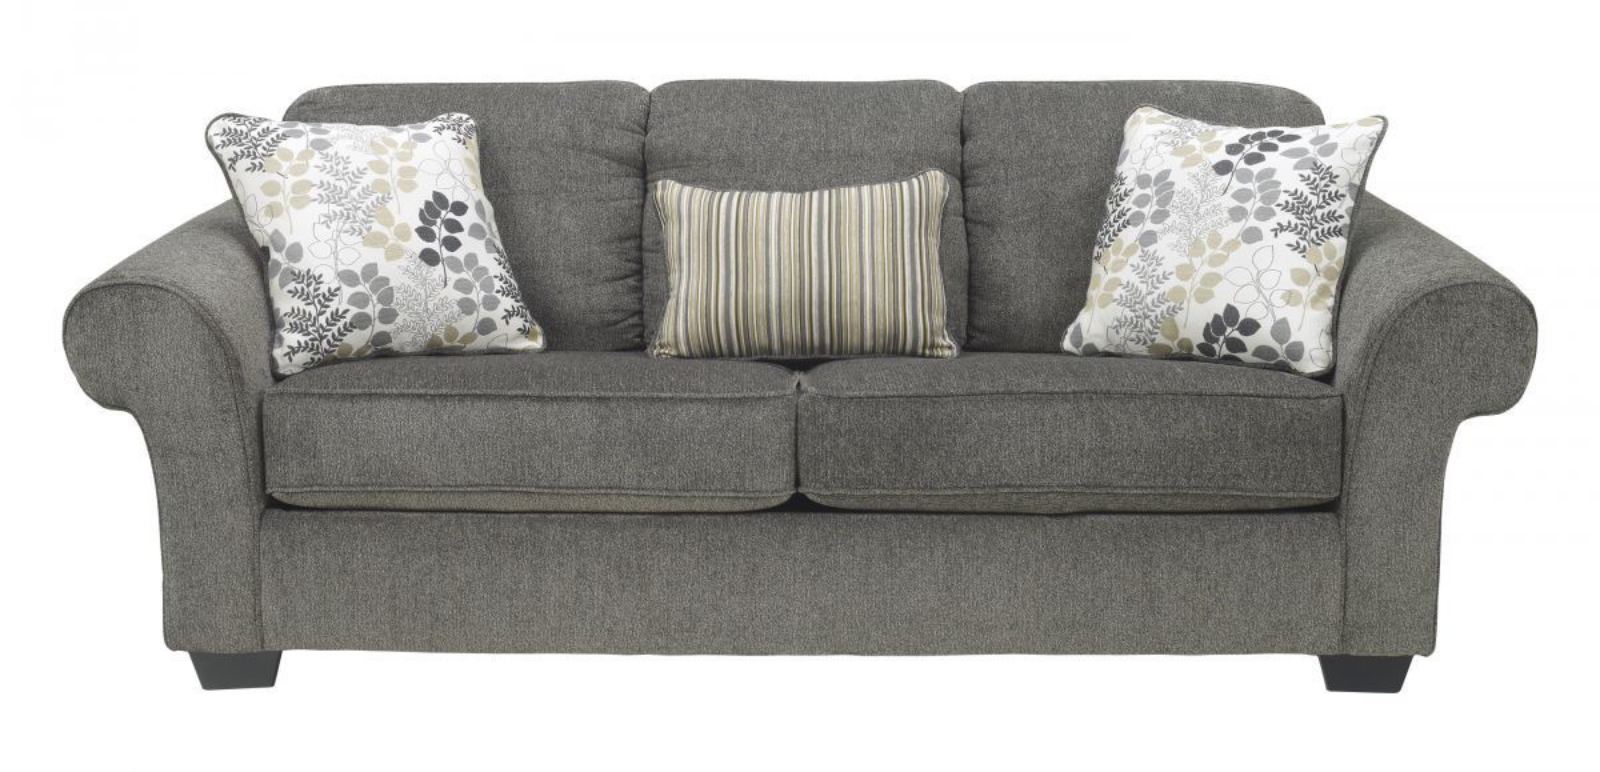 Picture of Makonnen Sofa